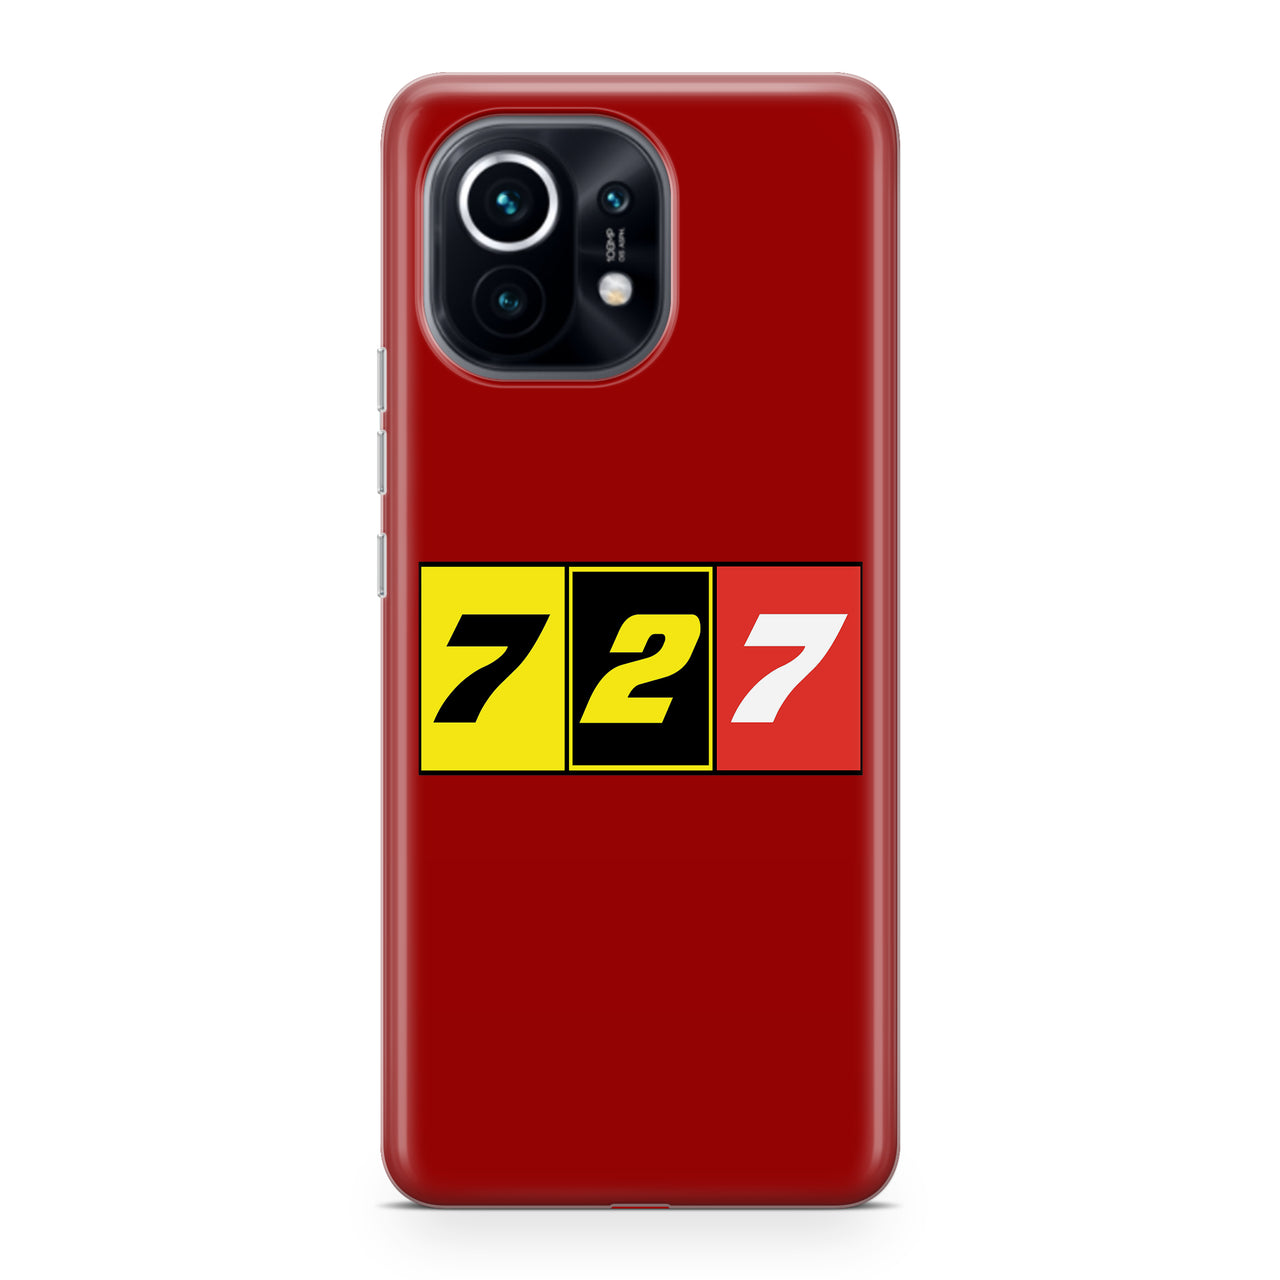 Flat Colourful 727 Designed Xiaomi Cases